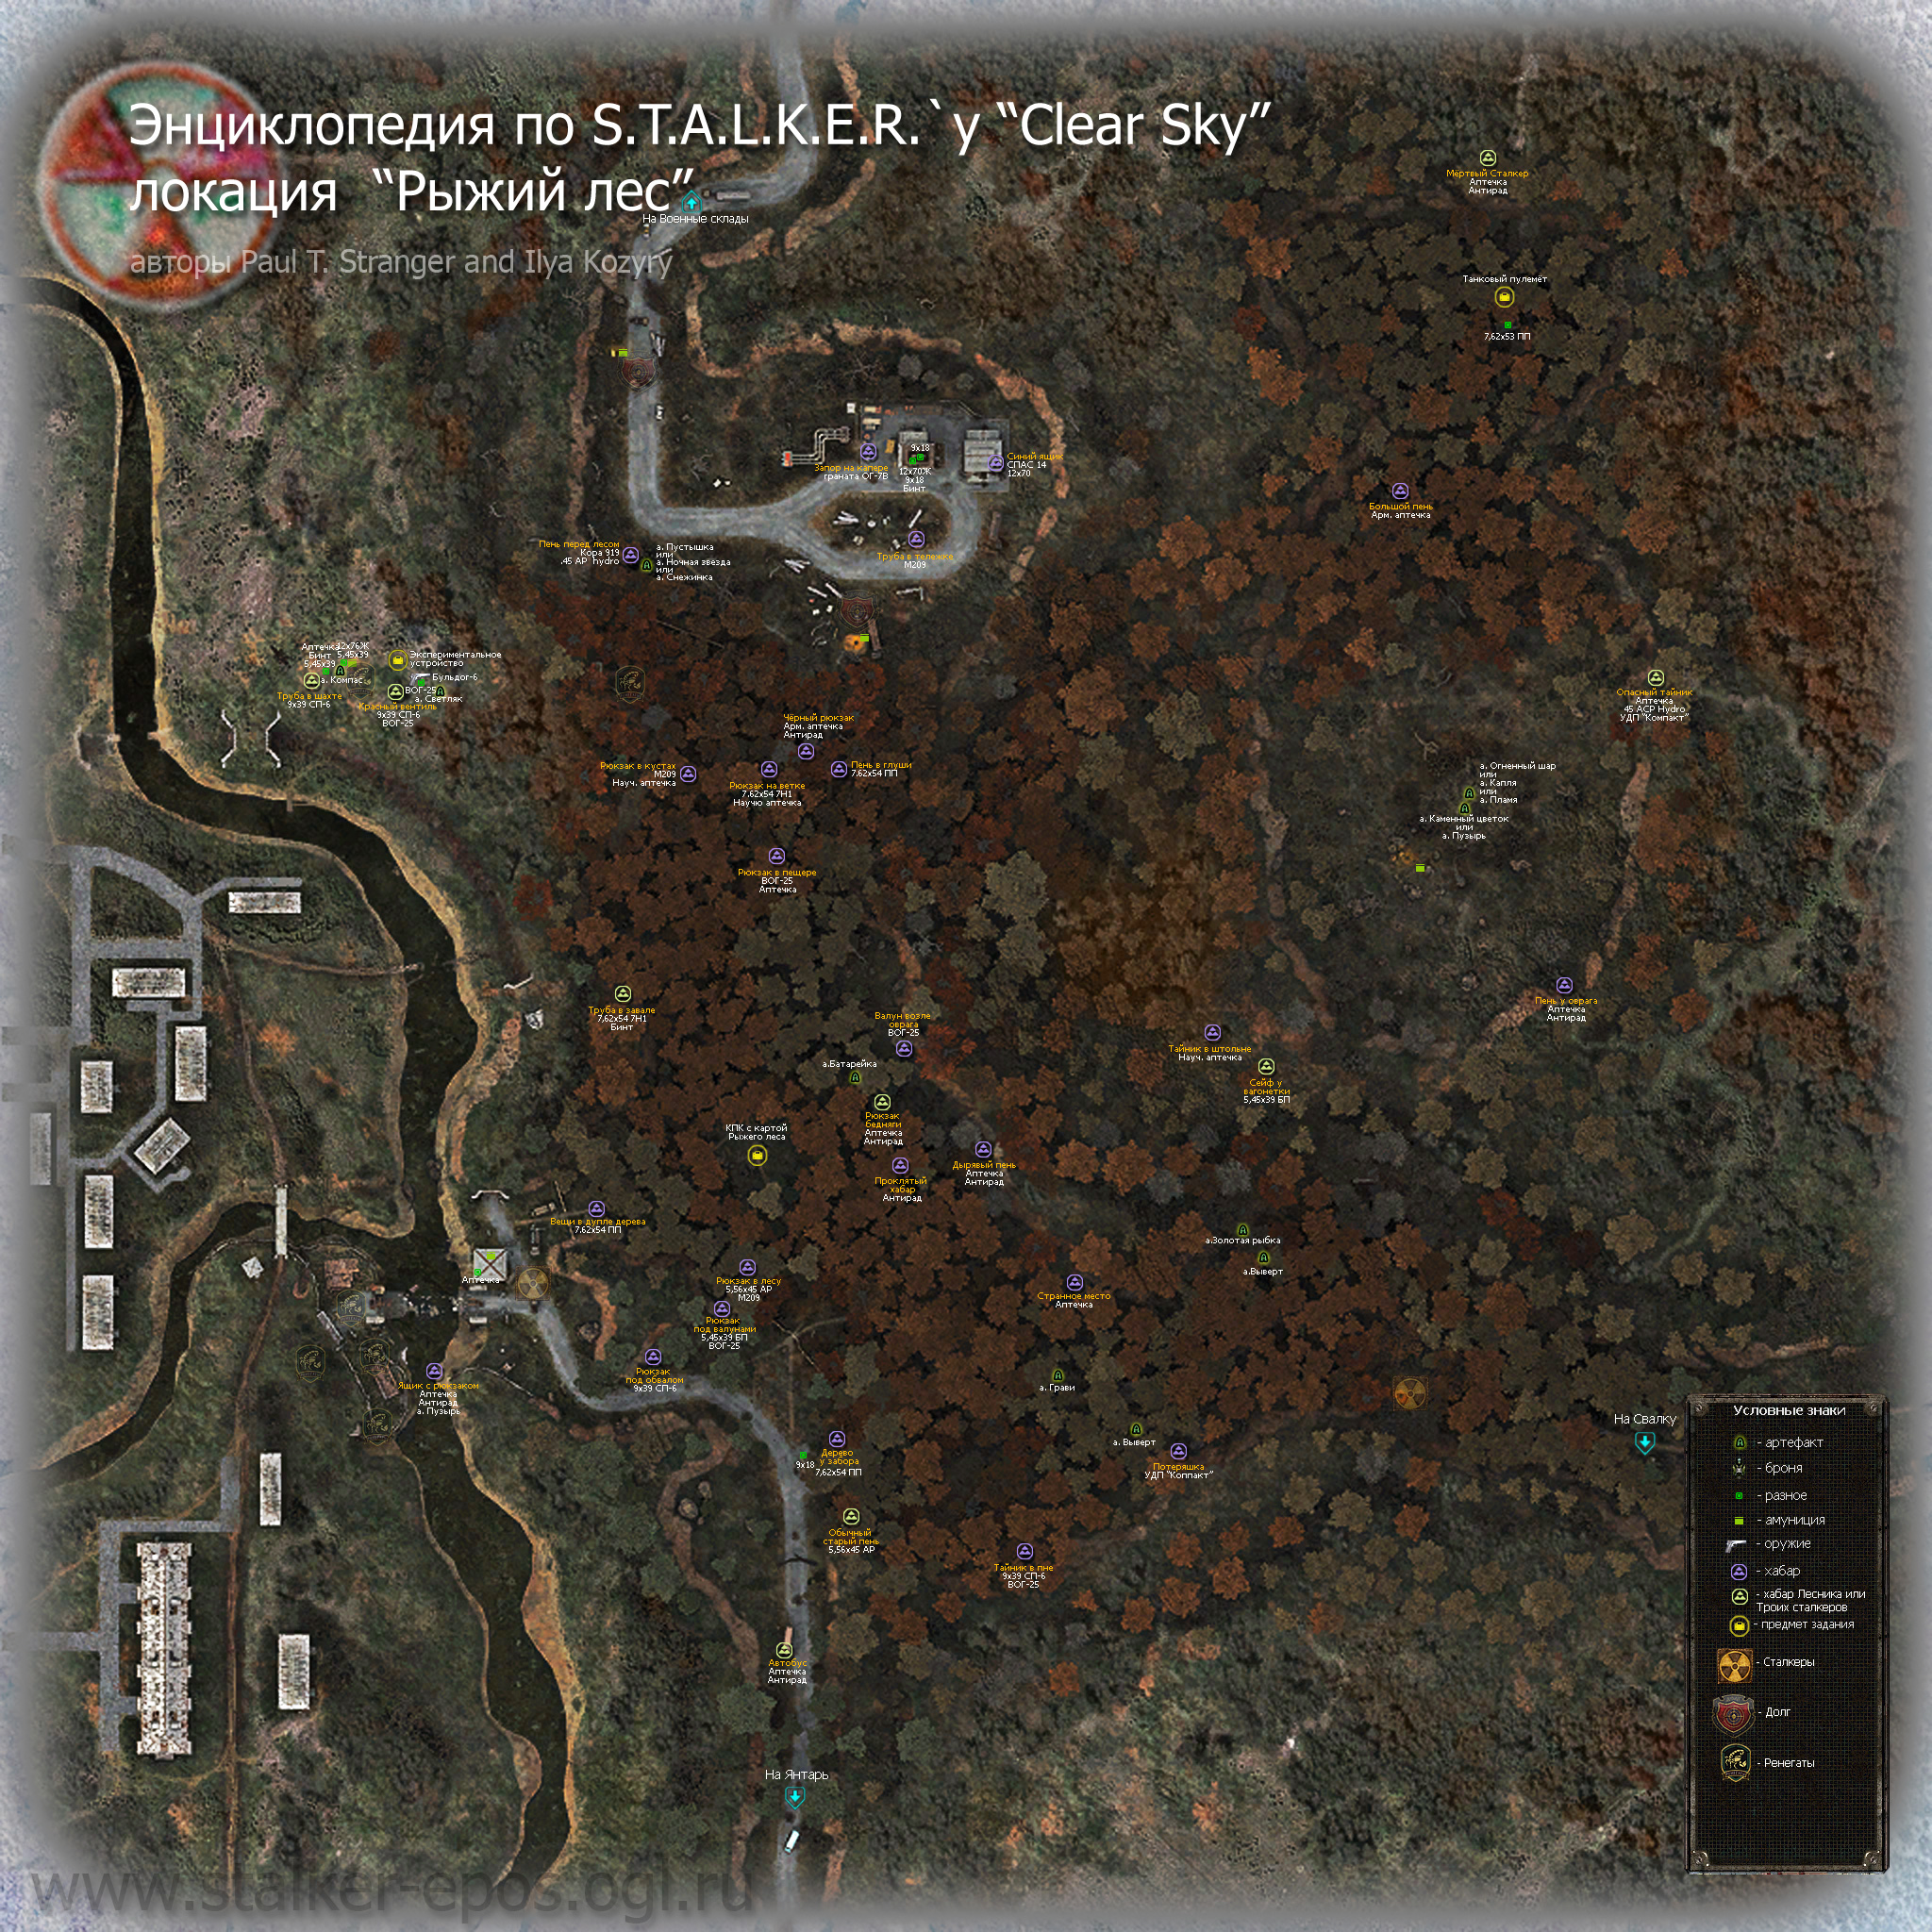 Dead air болота. Рыжий лес сталкер карта Dead Air. Сталкер чистое небо рыжий лес карта. Сталкер чистое небо карта артефактов рыжий лес. Карта рыжего леса сталкер чистое небо.